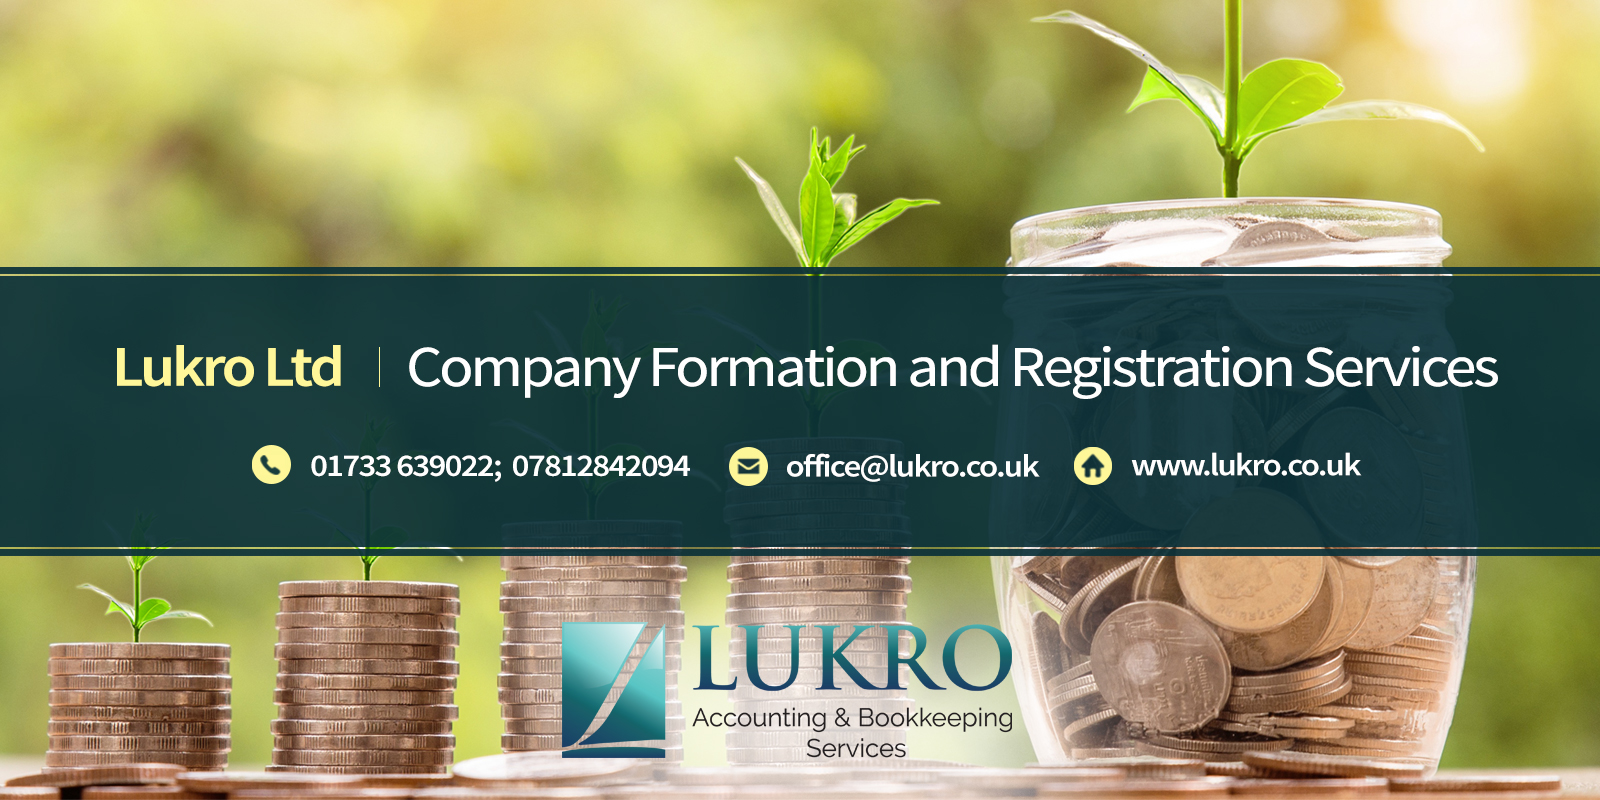 Lukro Ltd